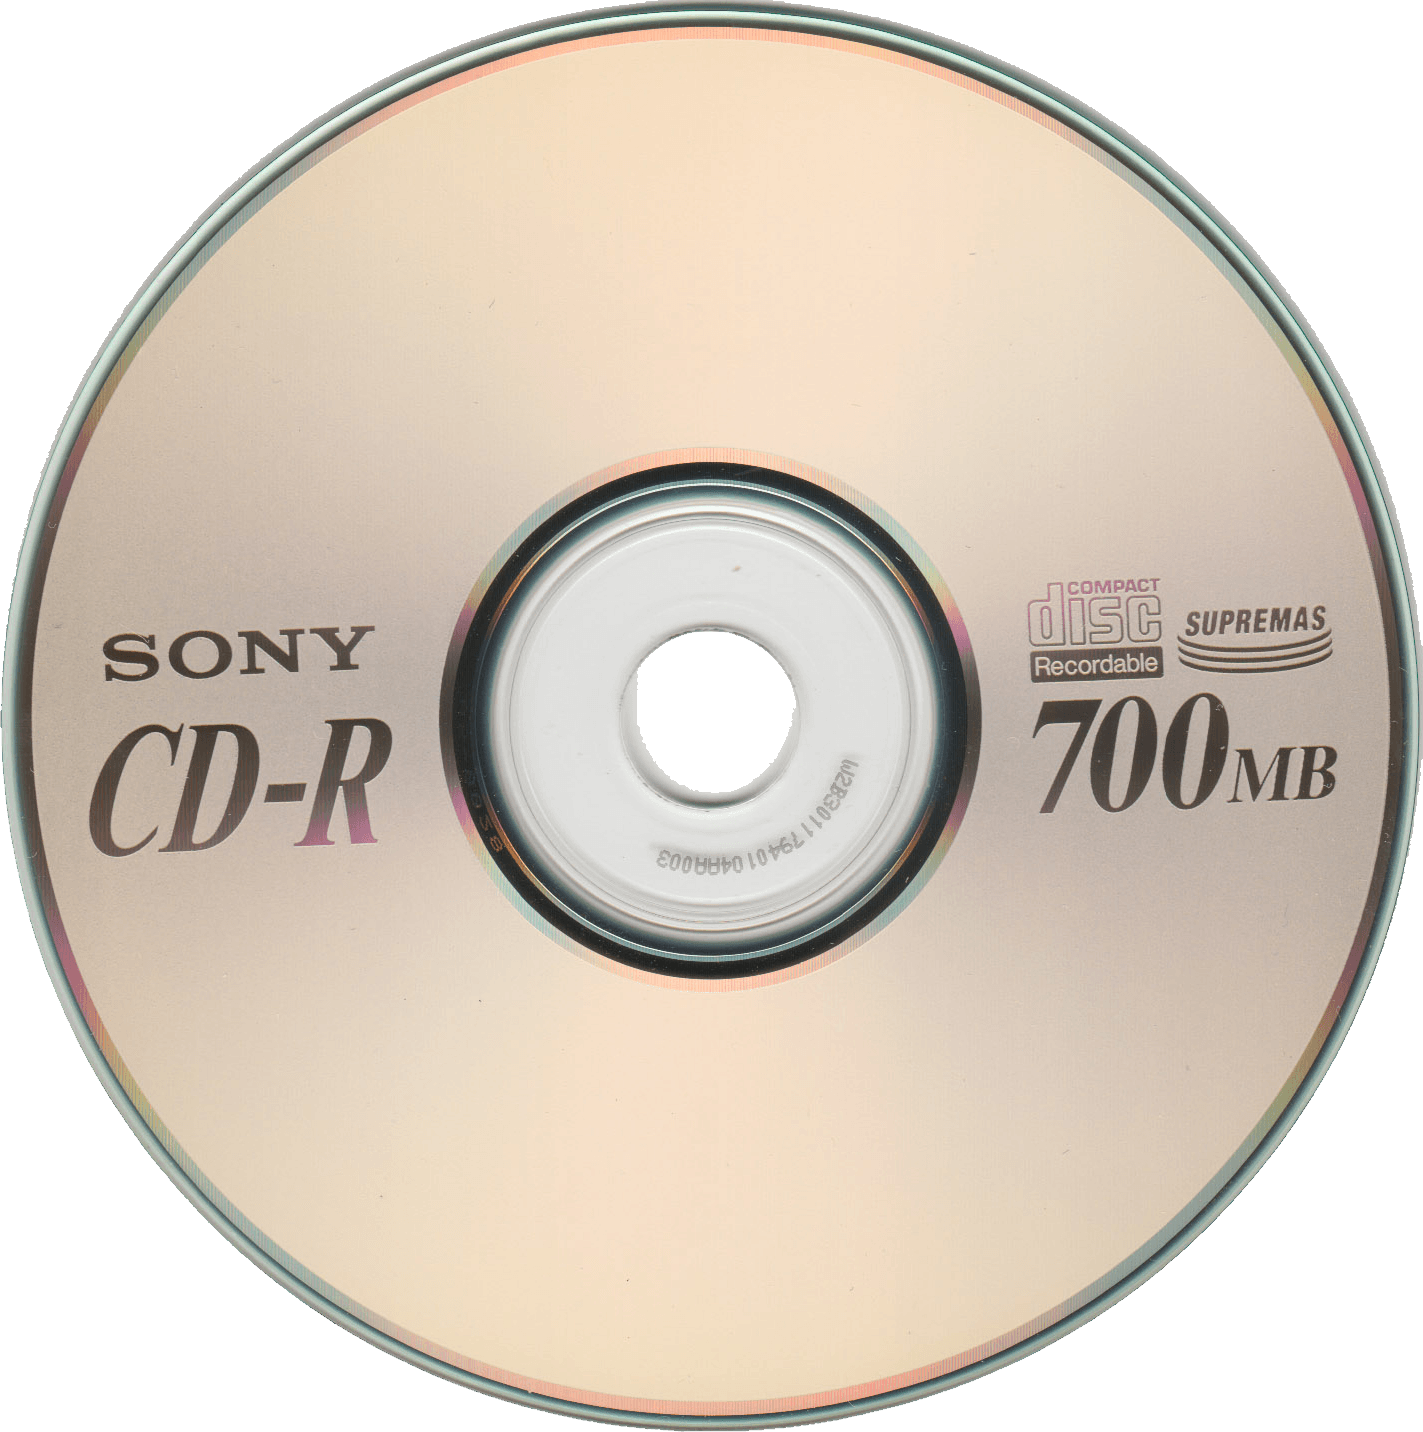 Compact disk cd png imahe